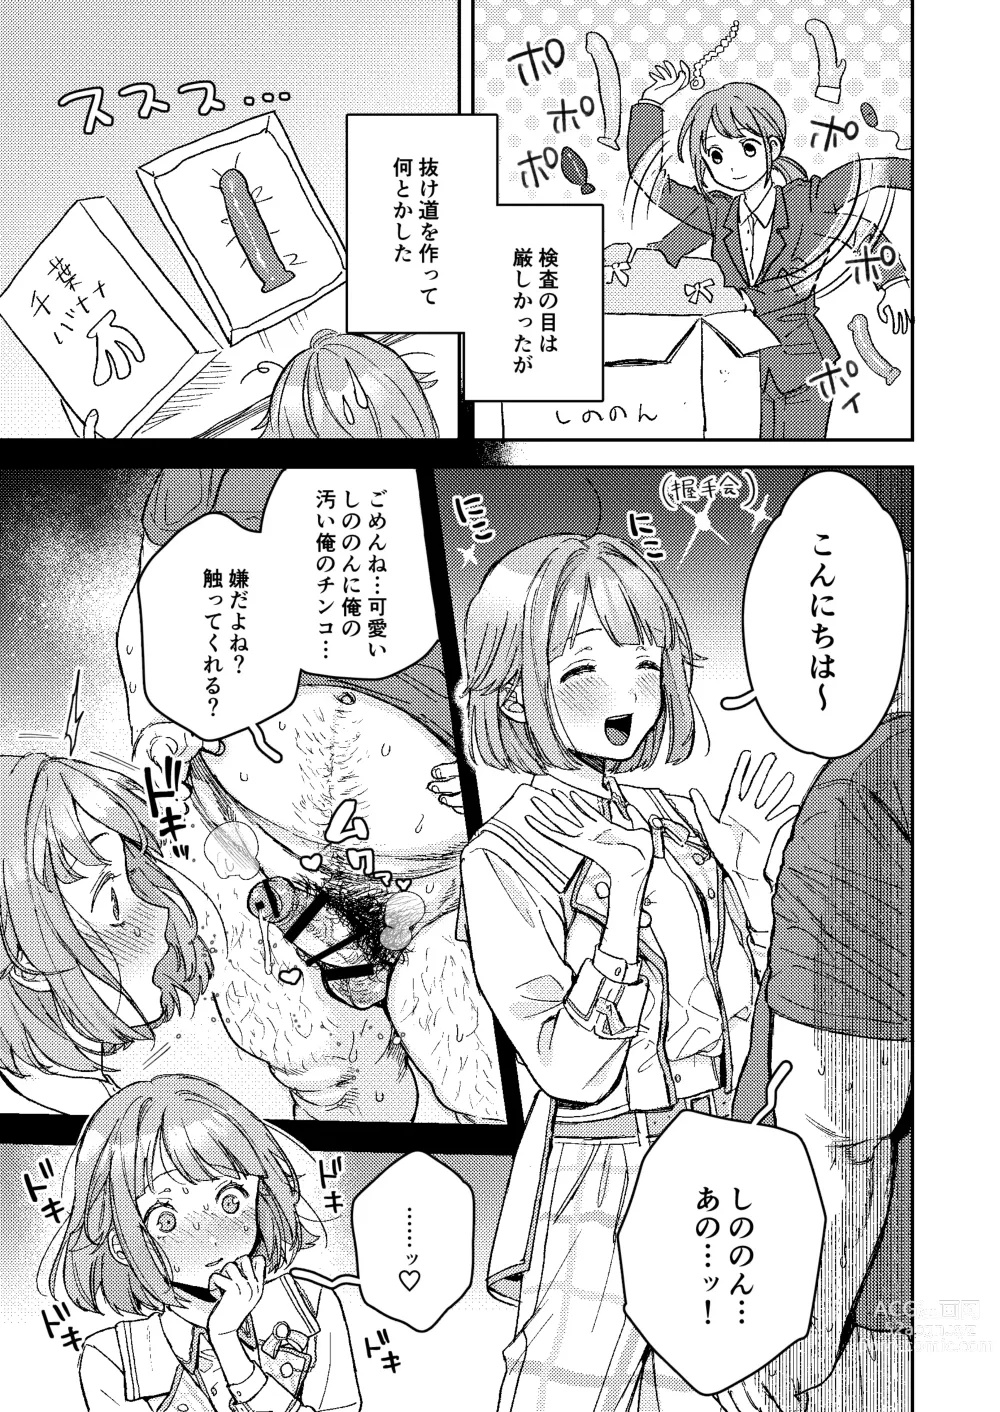 Page 10 of doujinshi Enema Ana 2